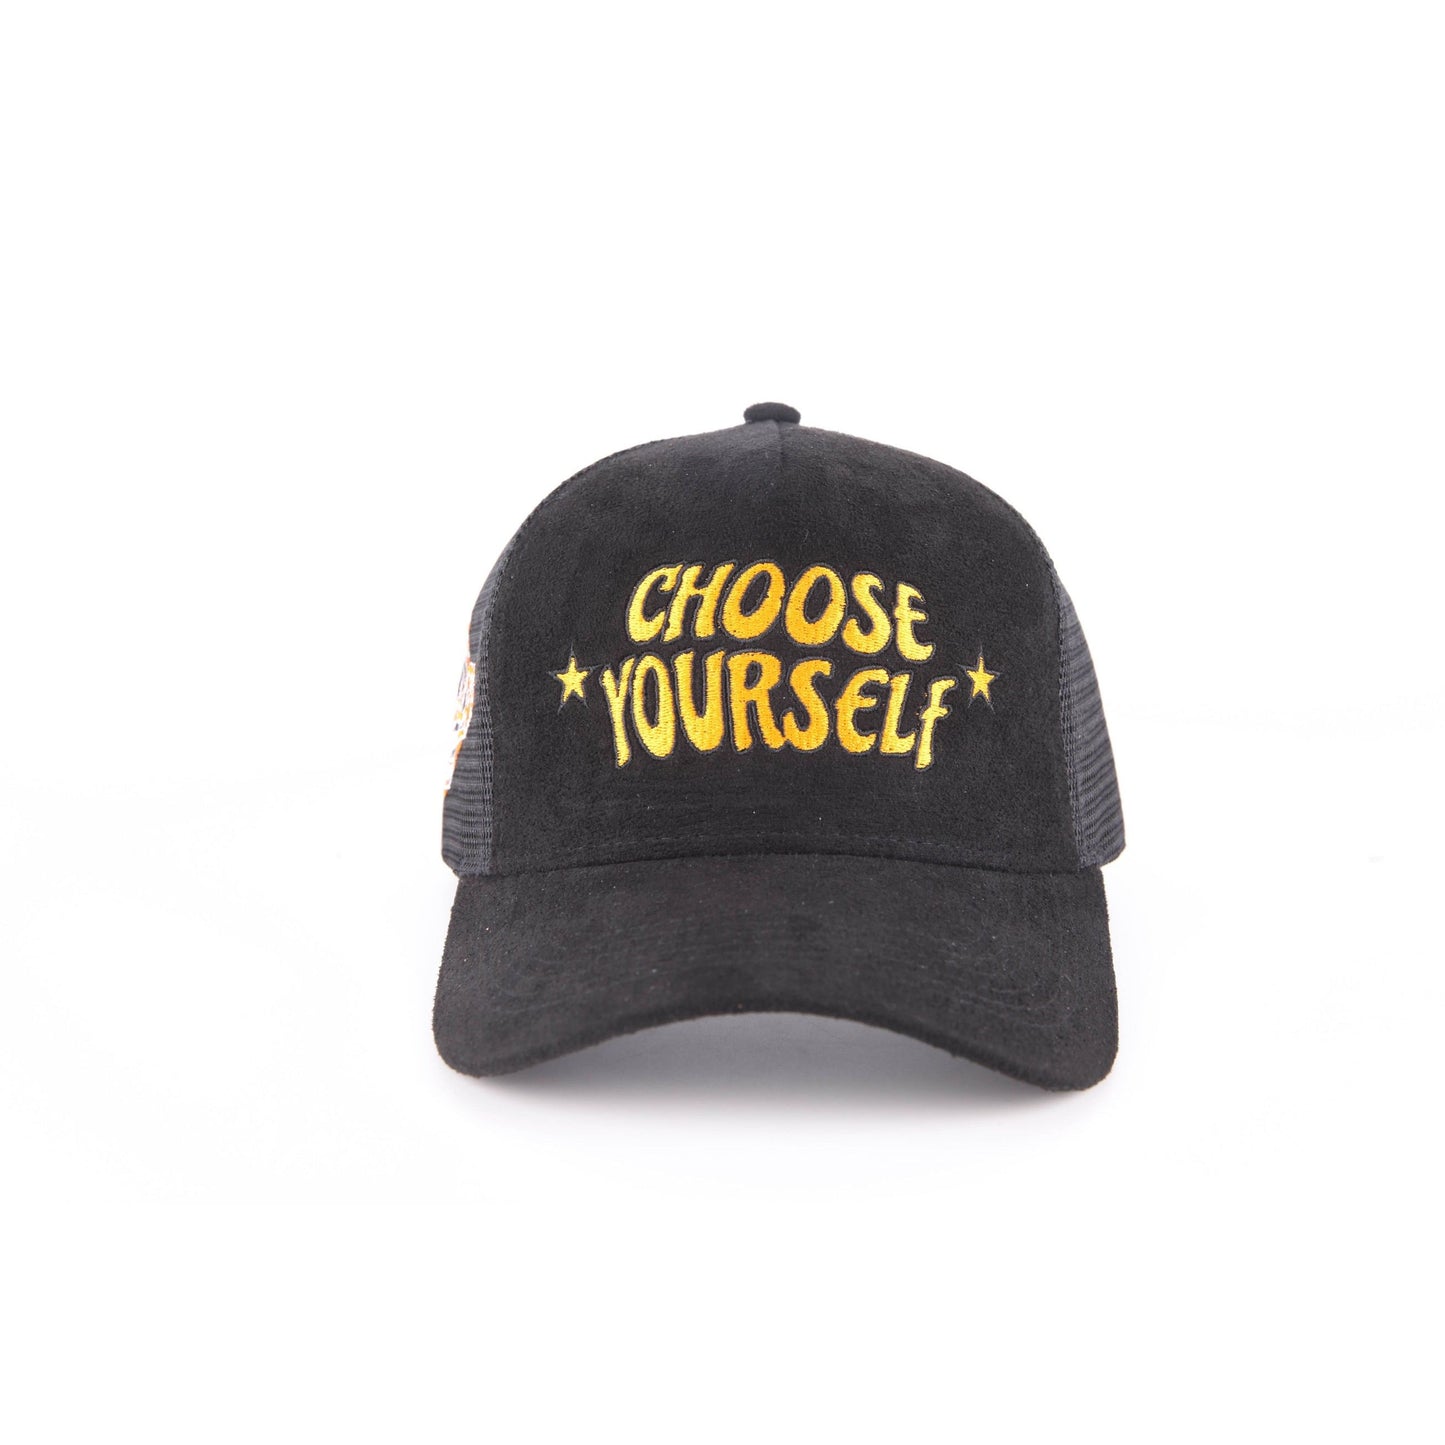 Choose Yourself Black Suede Trucker Hat